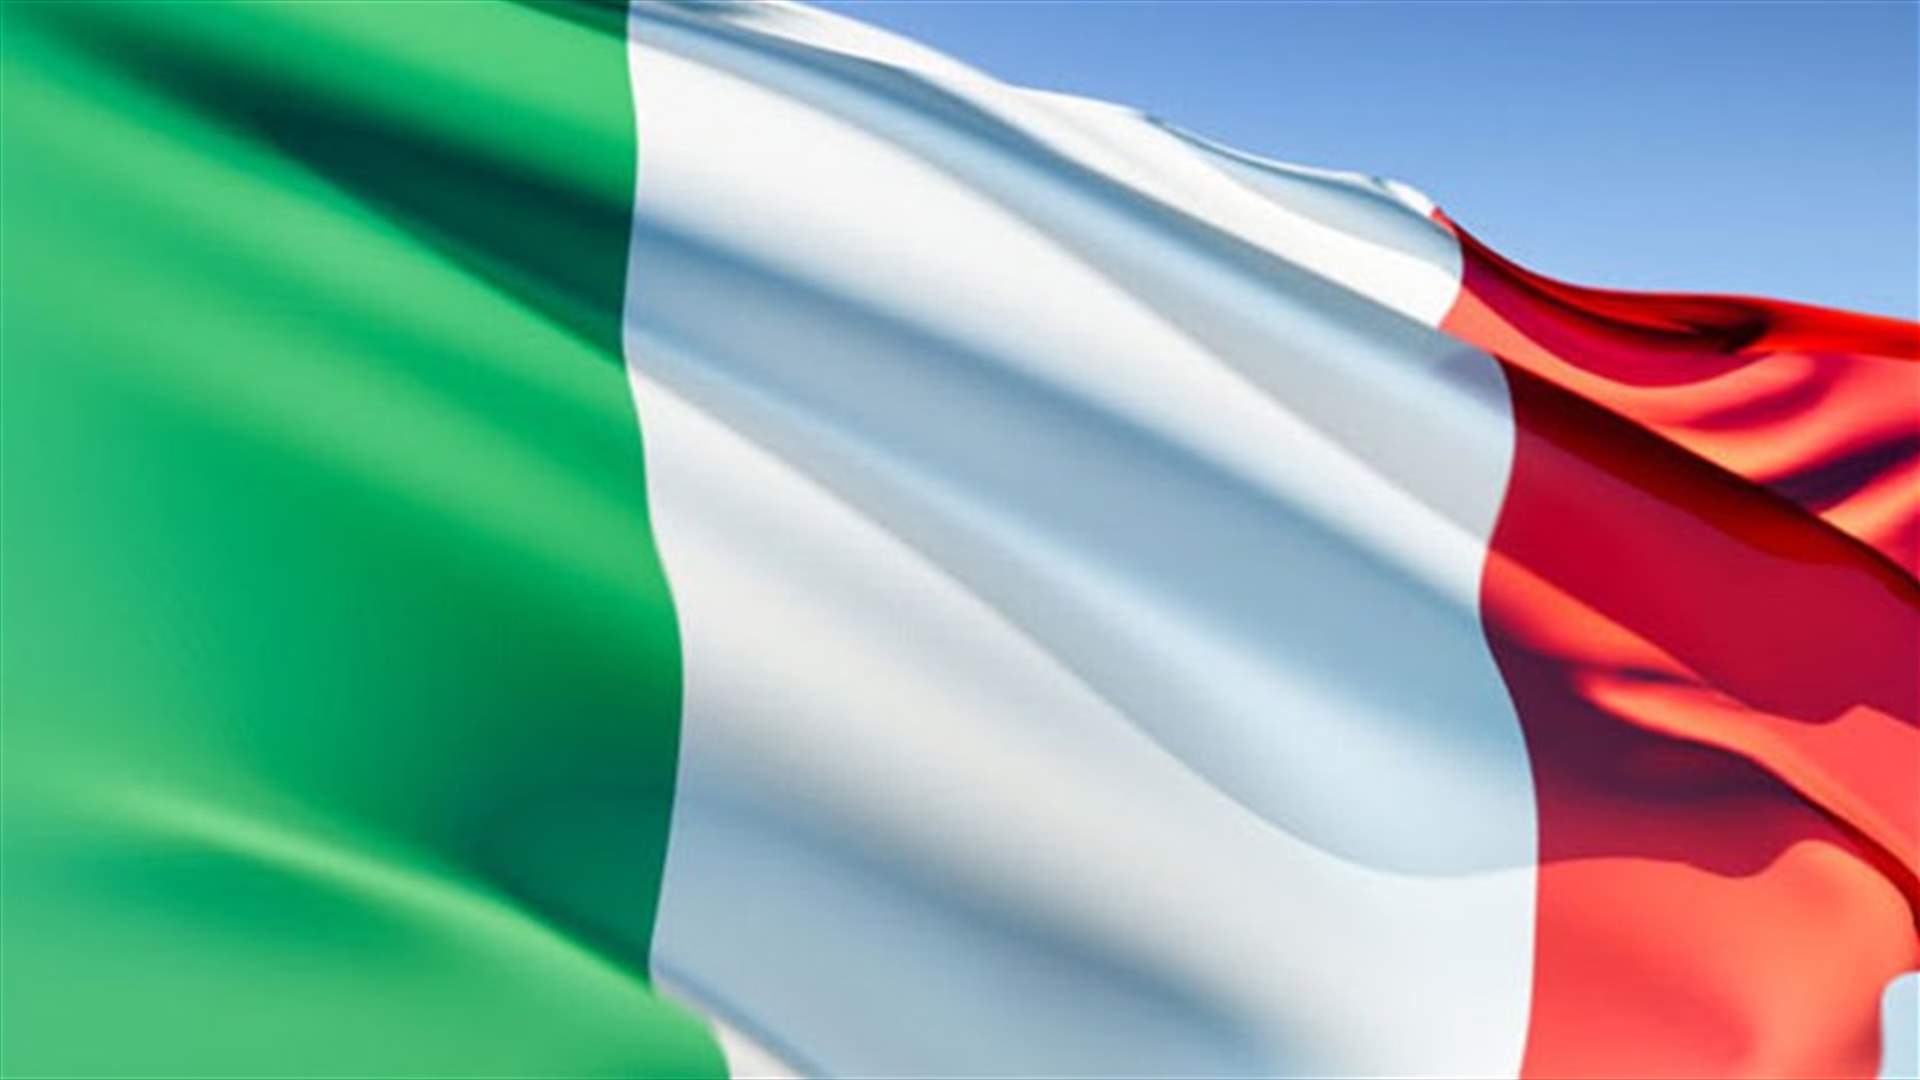 Italy’s President from Beirut: International community must help Lebanon over refugee crisis